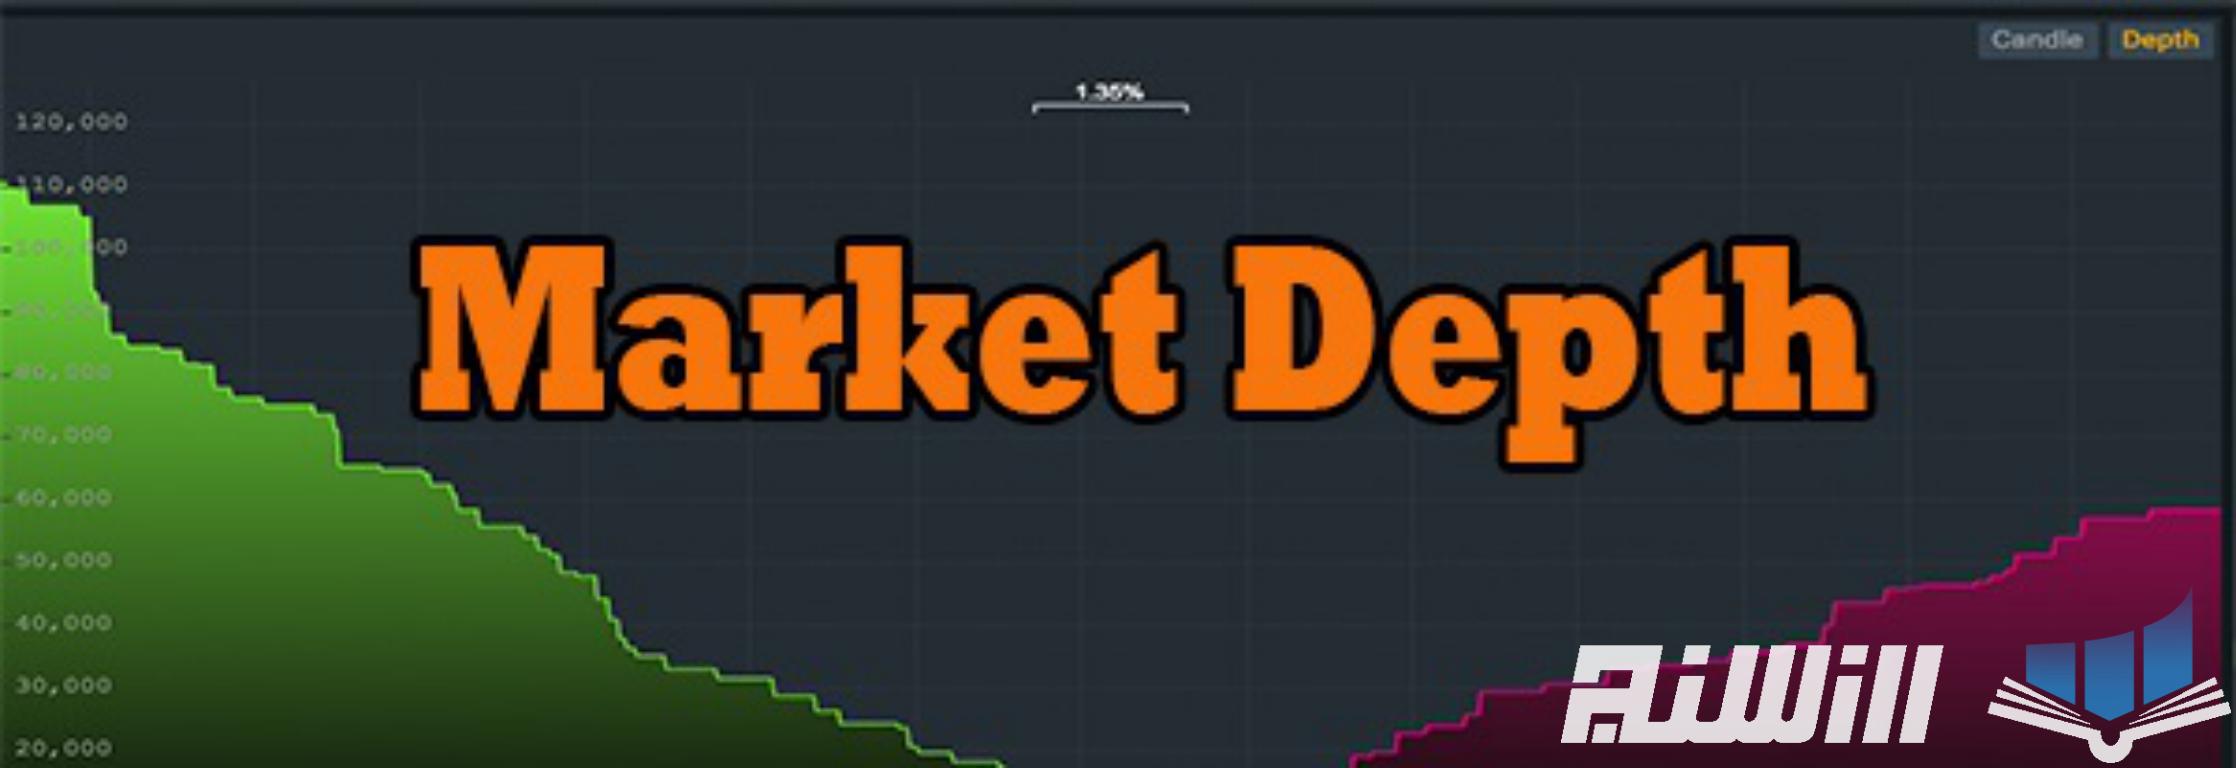 Market Depth 